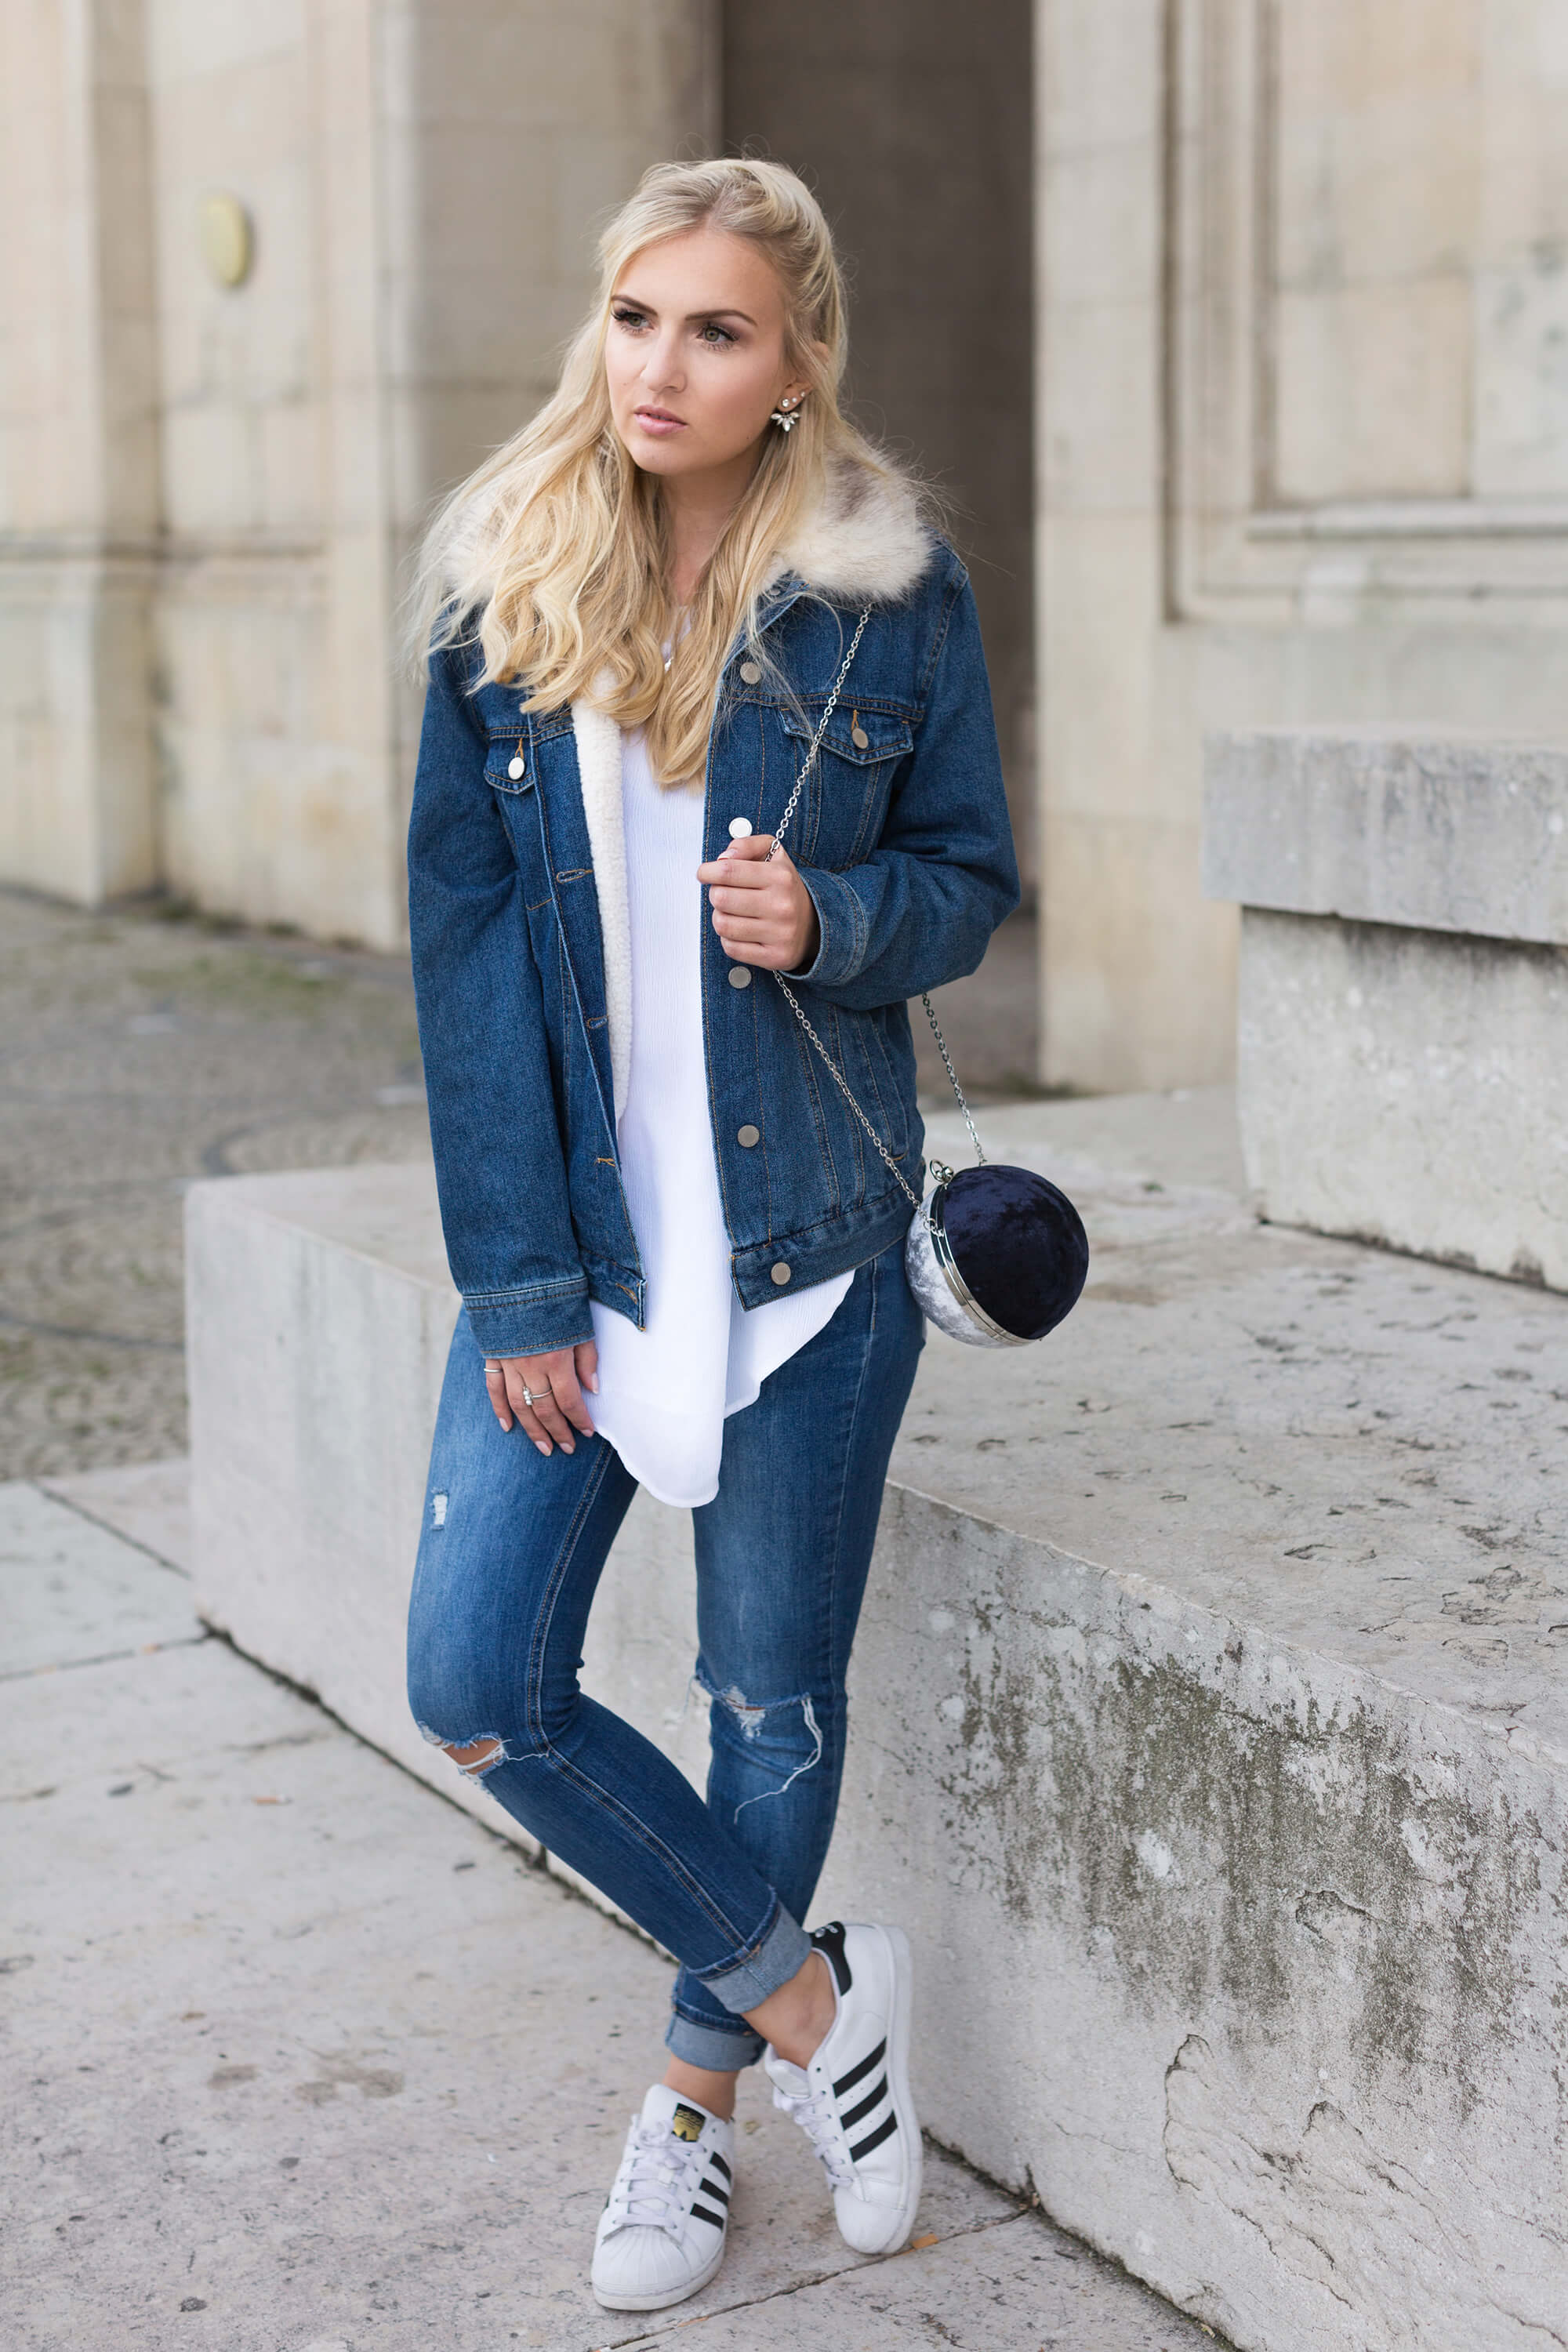 Double Denim Look Jeans richtig kombinieren Fashion Blog Katefully